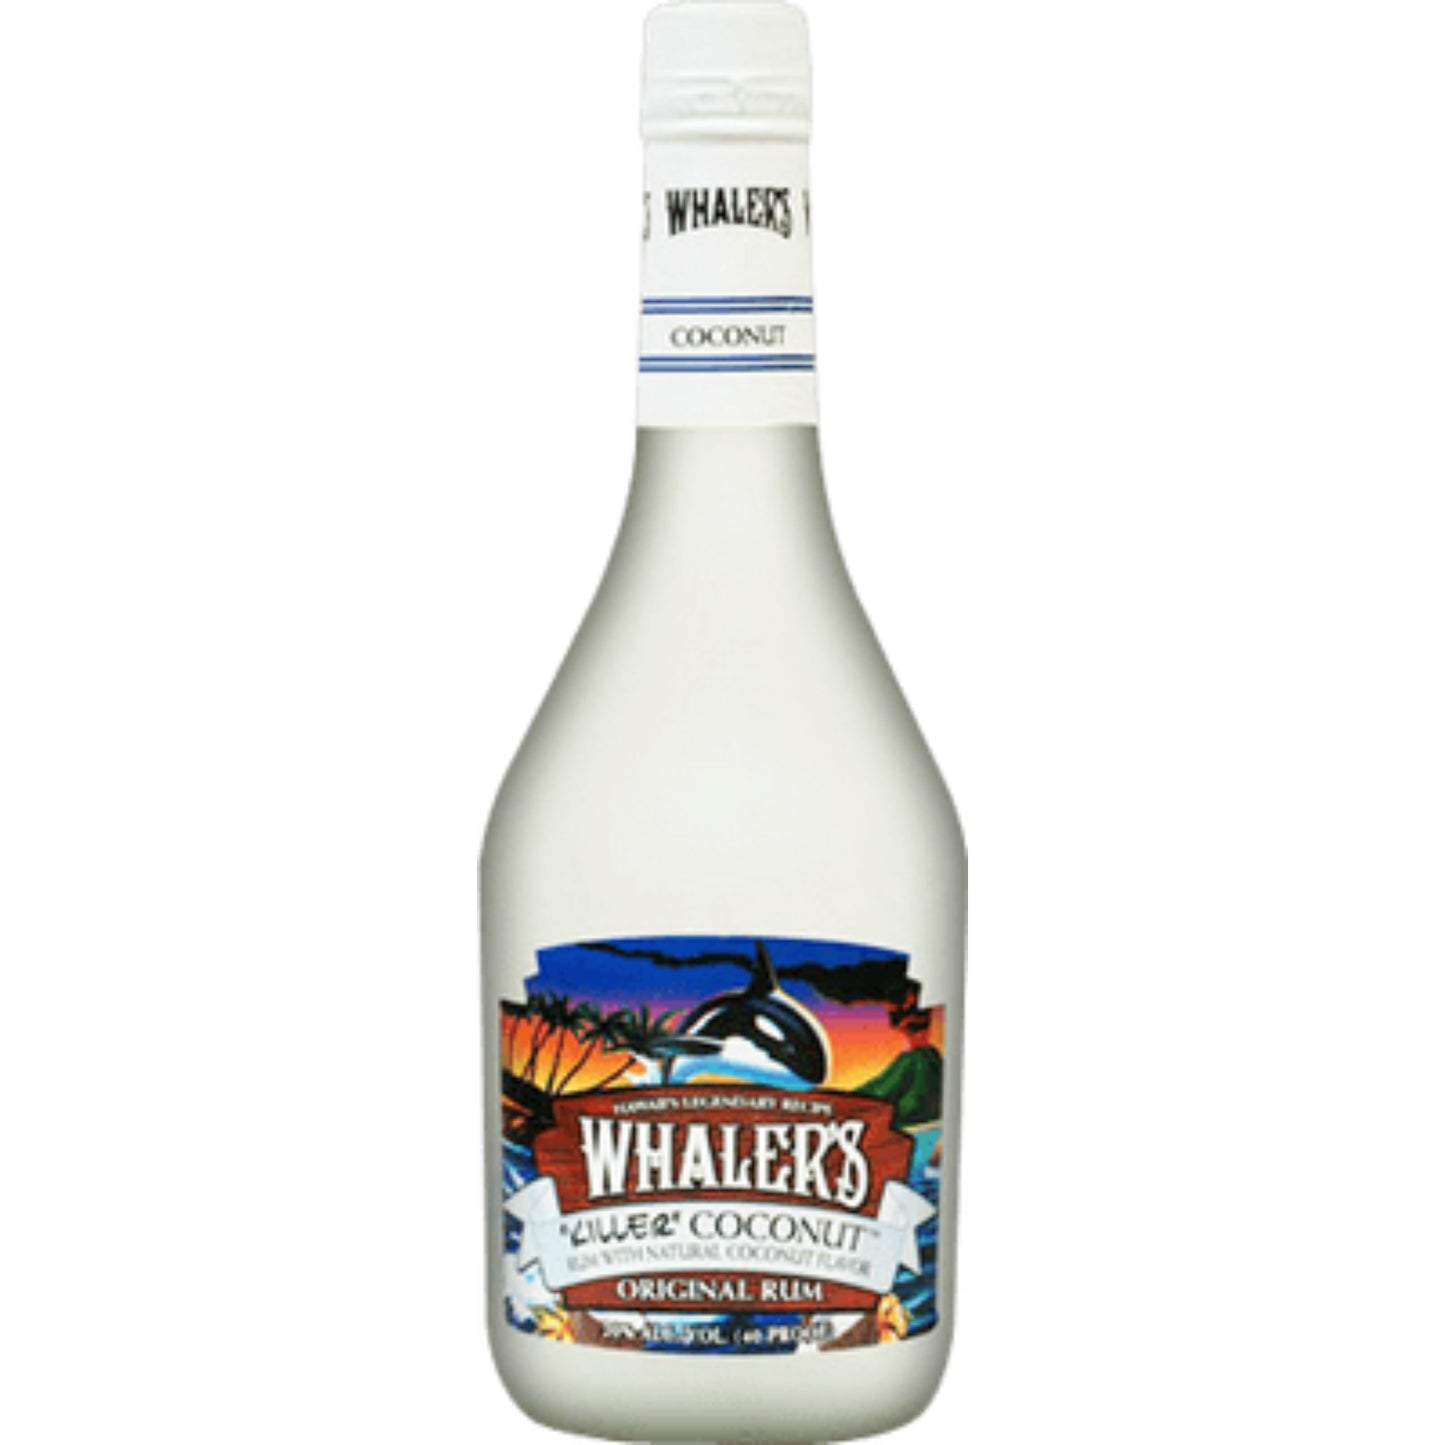 Whaler's Killer Coconut Rum - Liquor Geeks